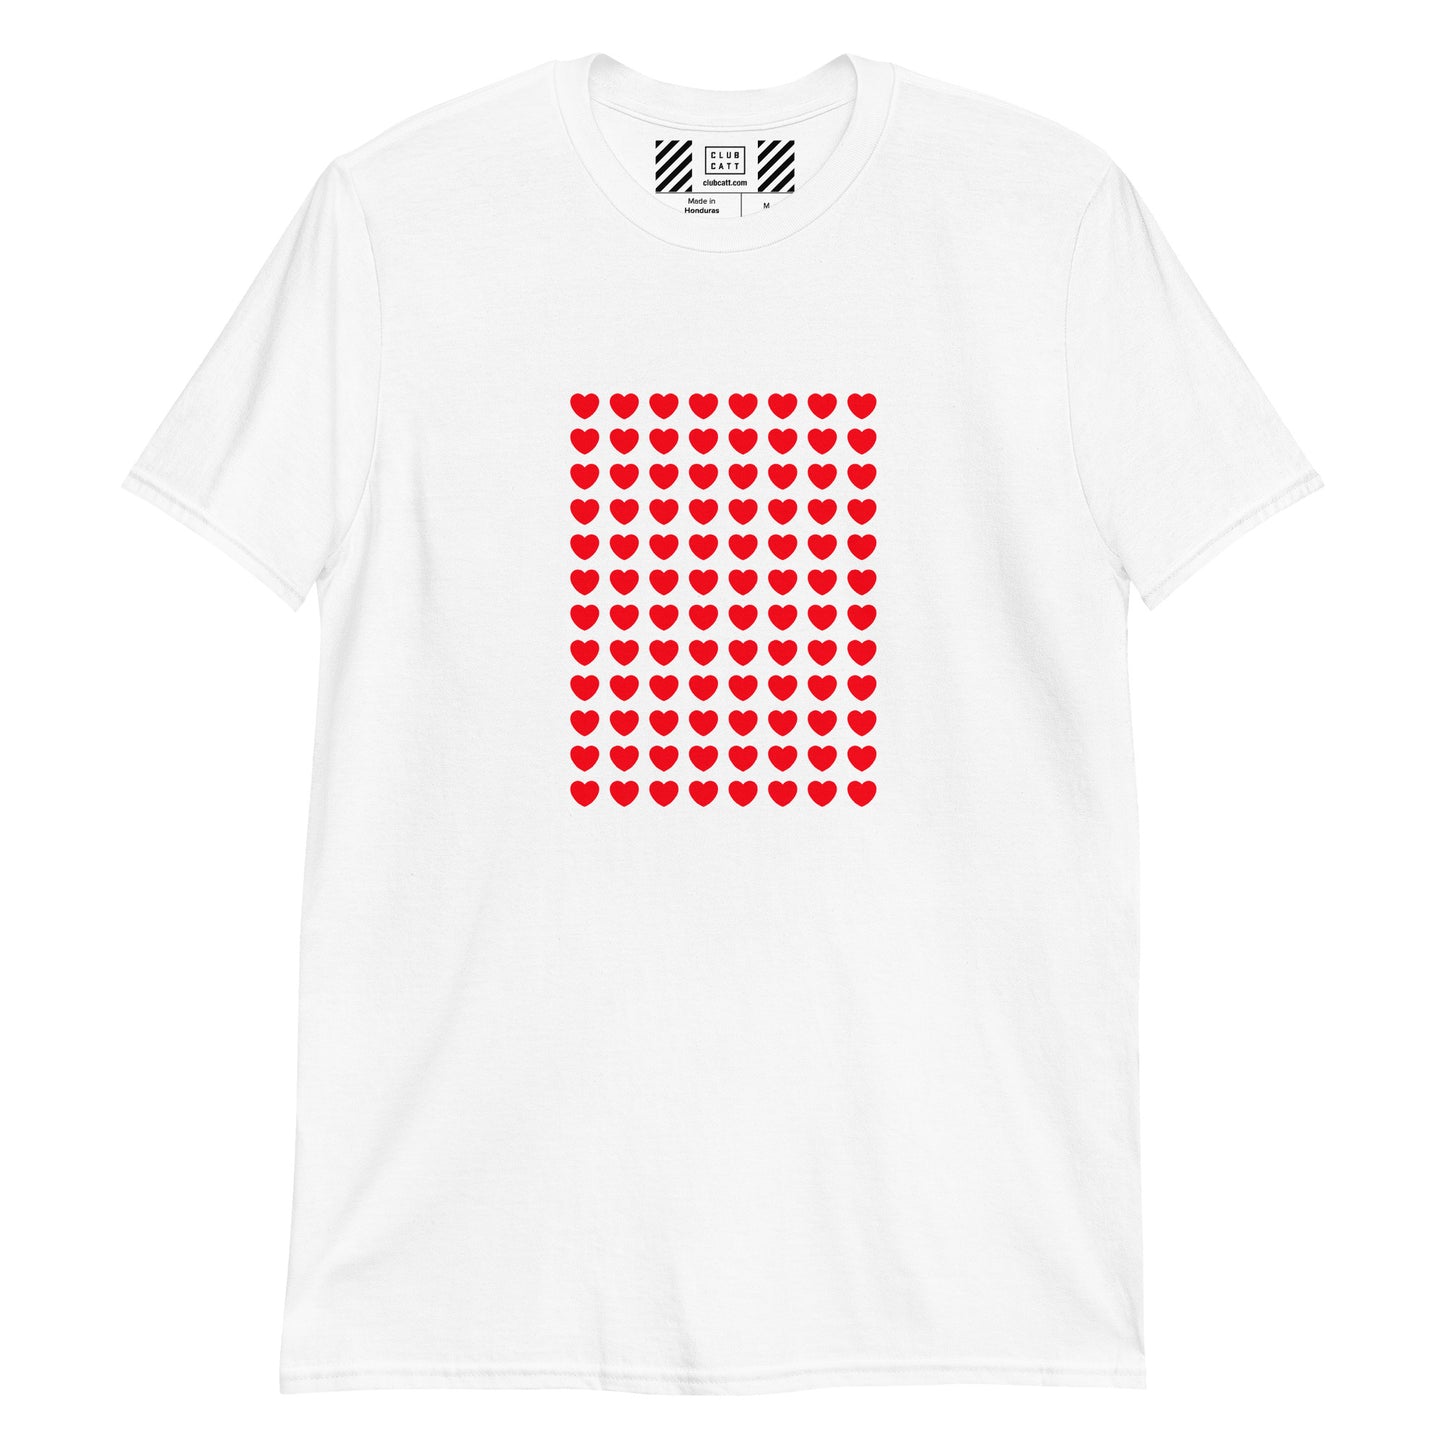 96 Hearts T-Shirt